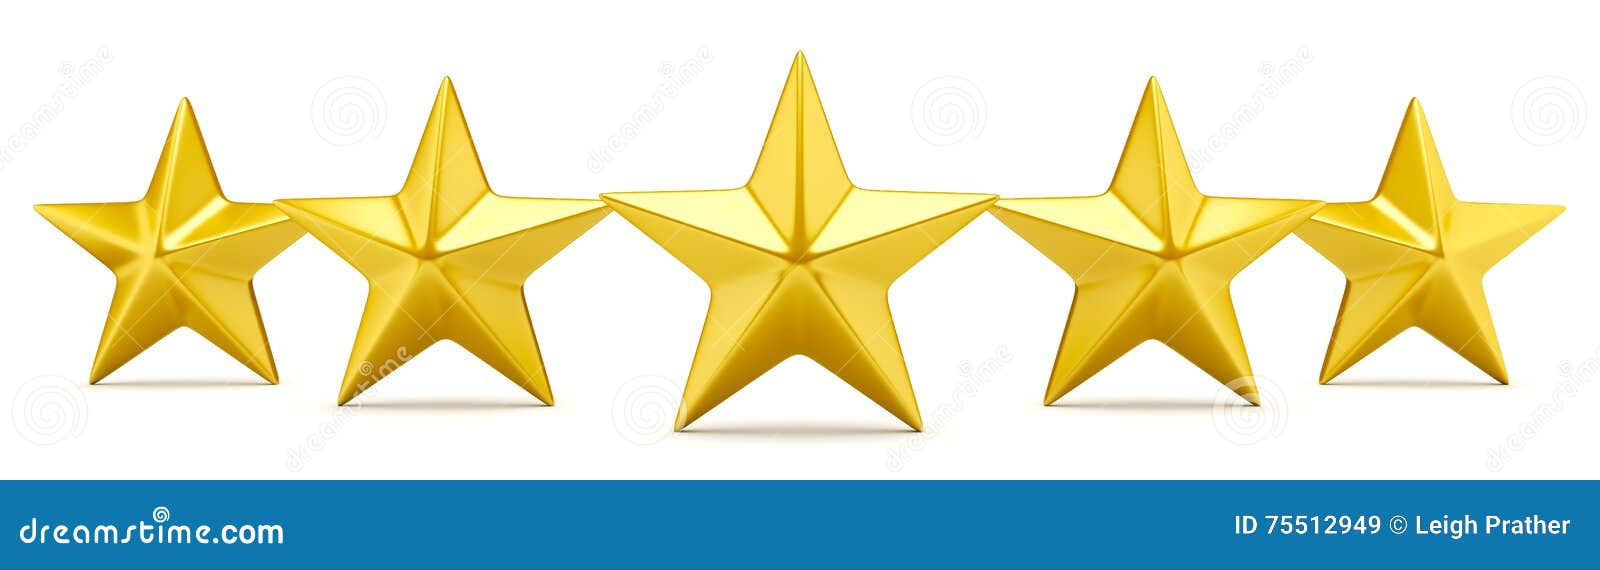 five star rating shiny golden stars